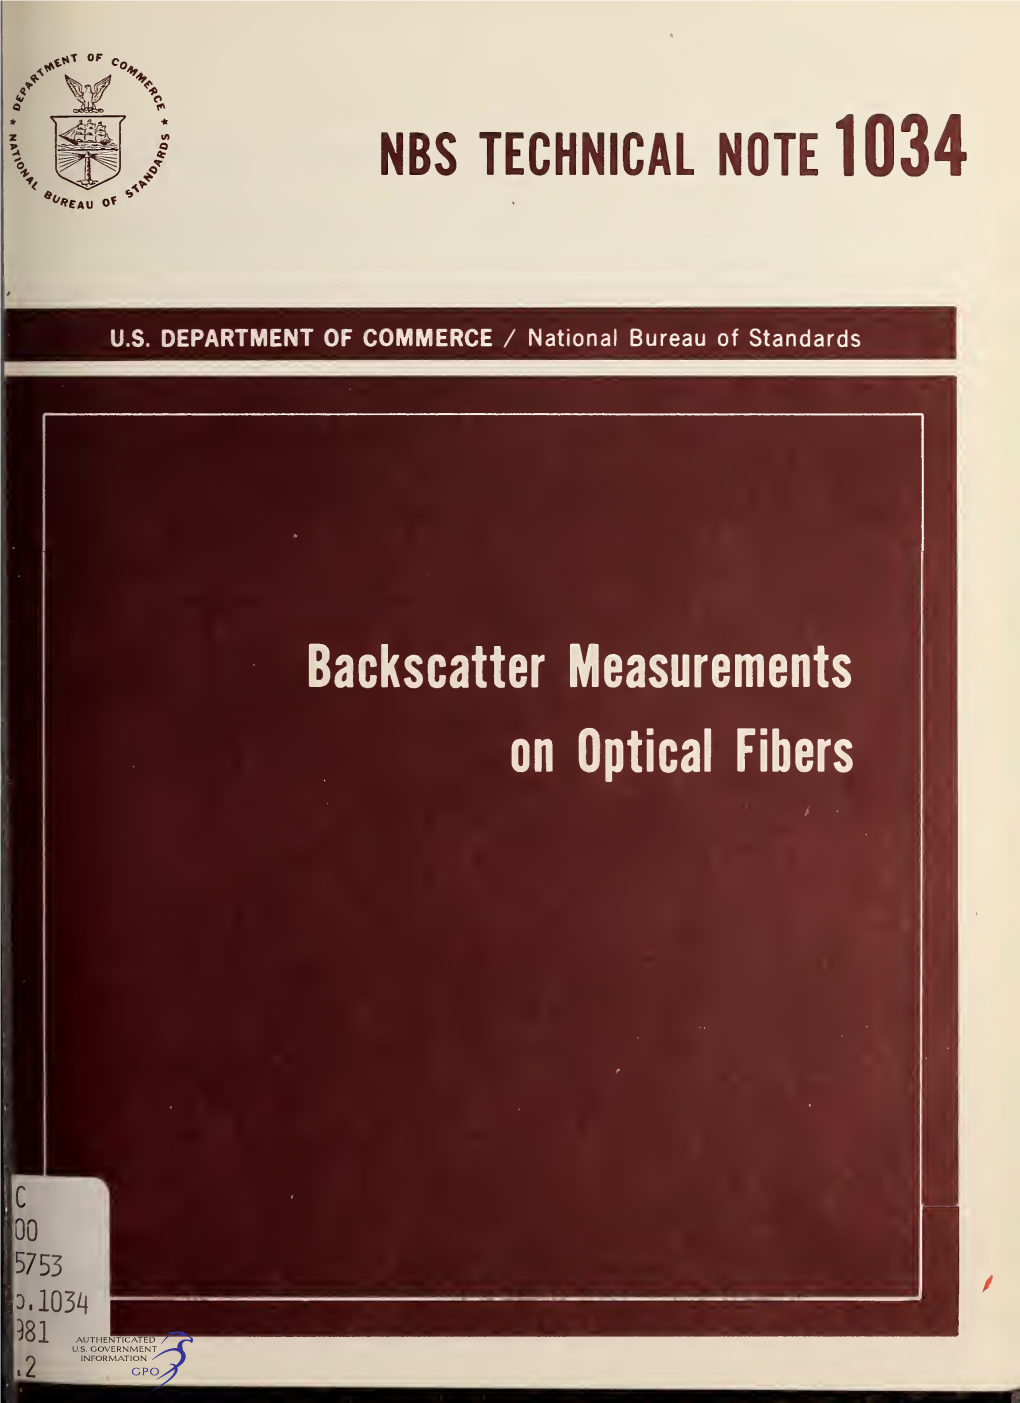 Backscatter Measurements on Optical Fibers